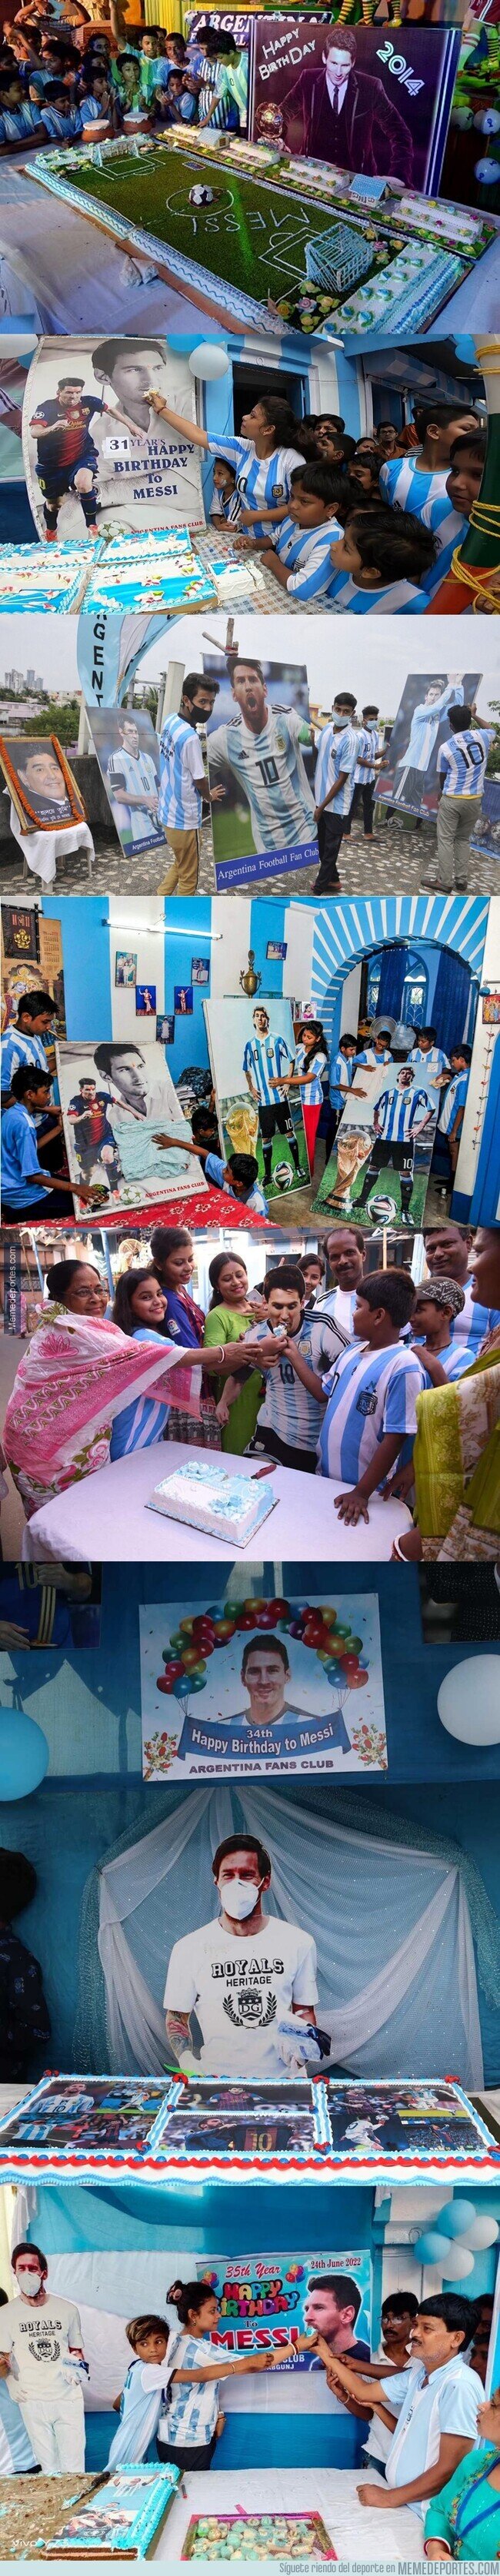 1164361 - El cumpleaños de Messi en la India es una fiesta nacional